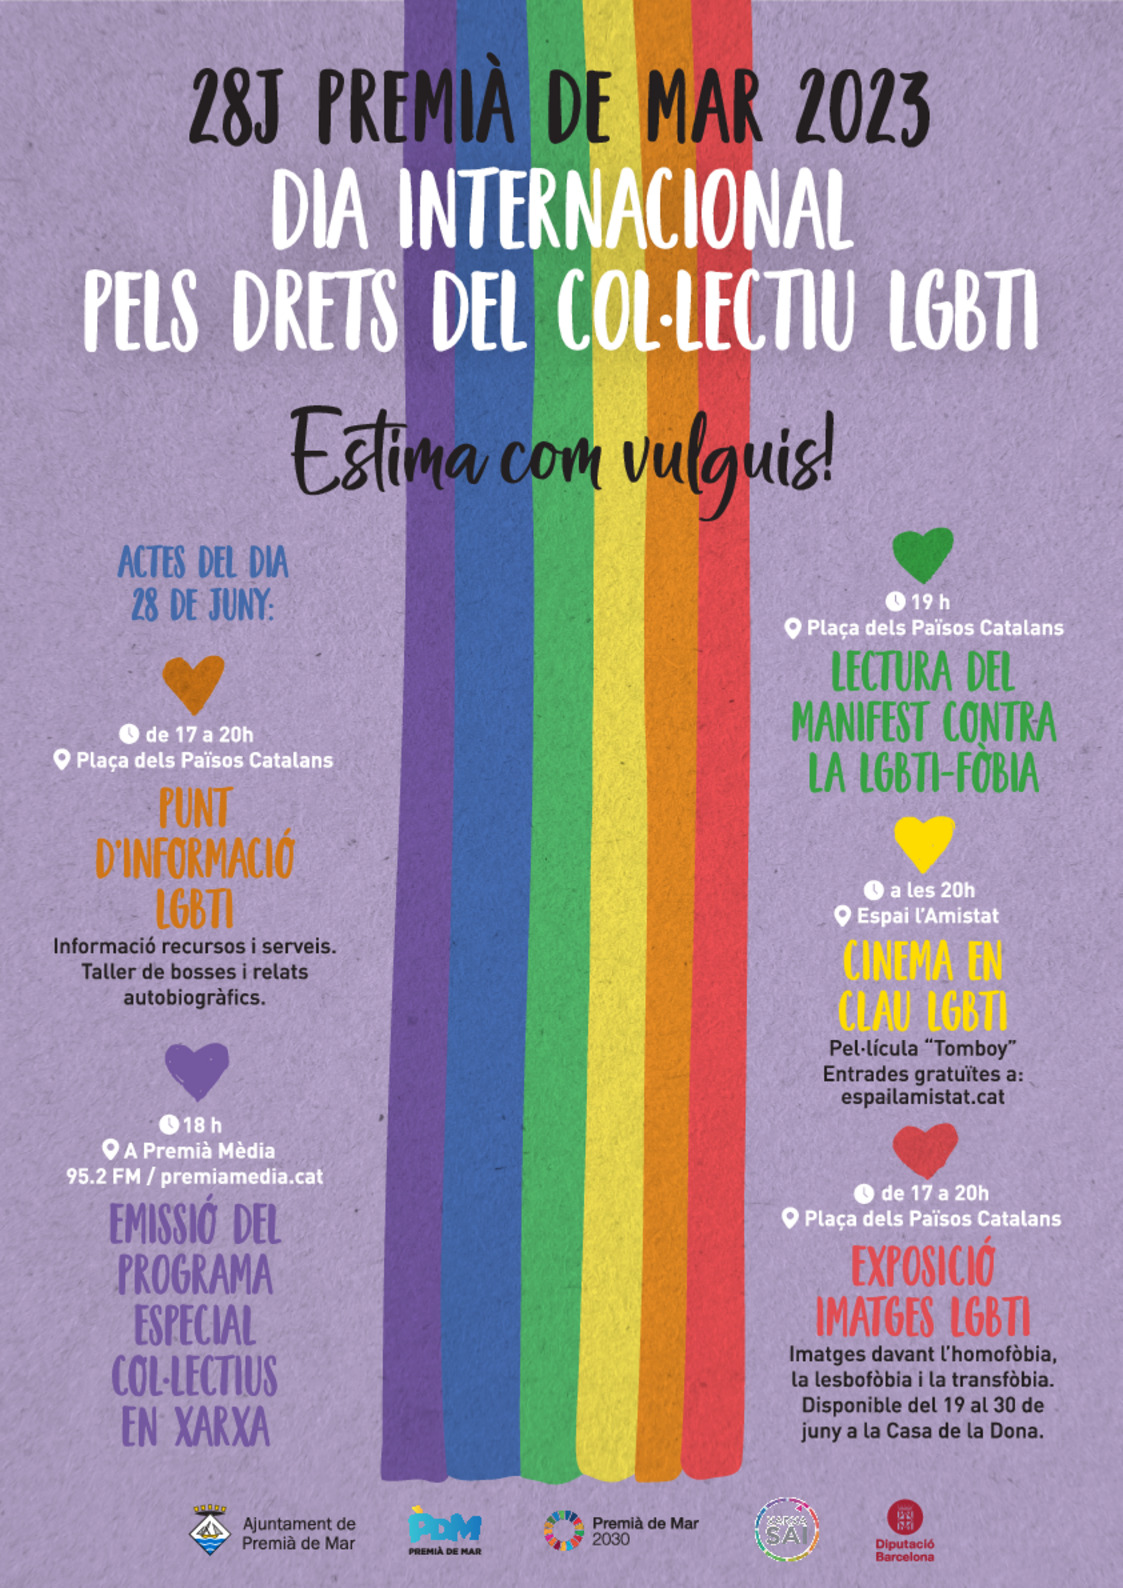 Punt d'informaci LGBTI